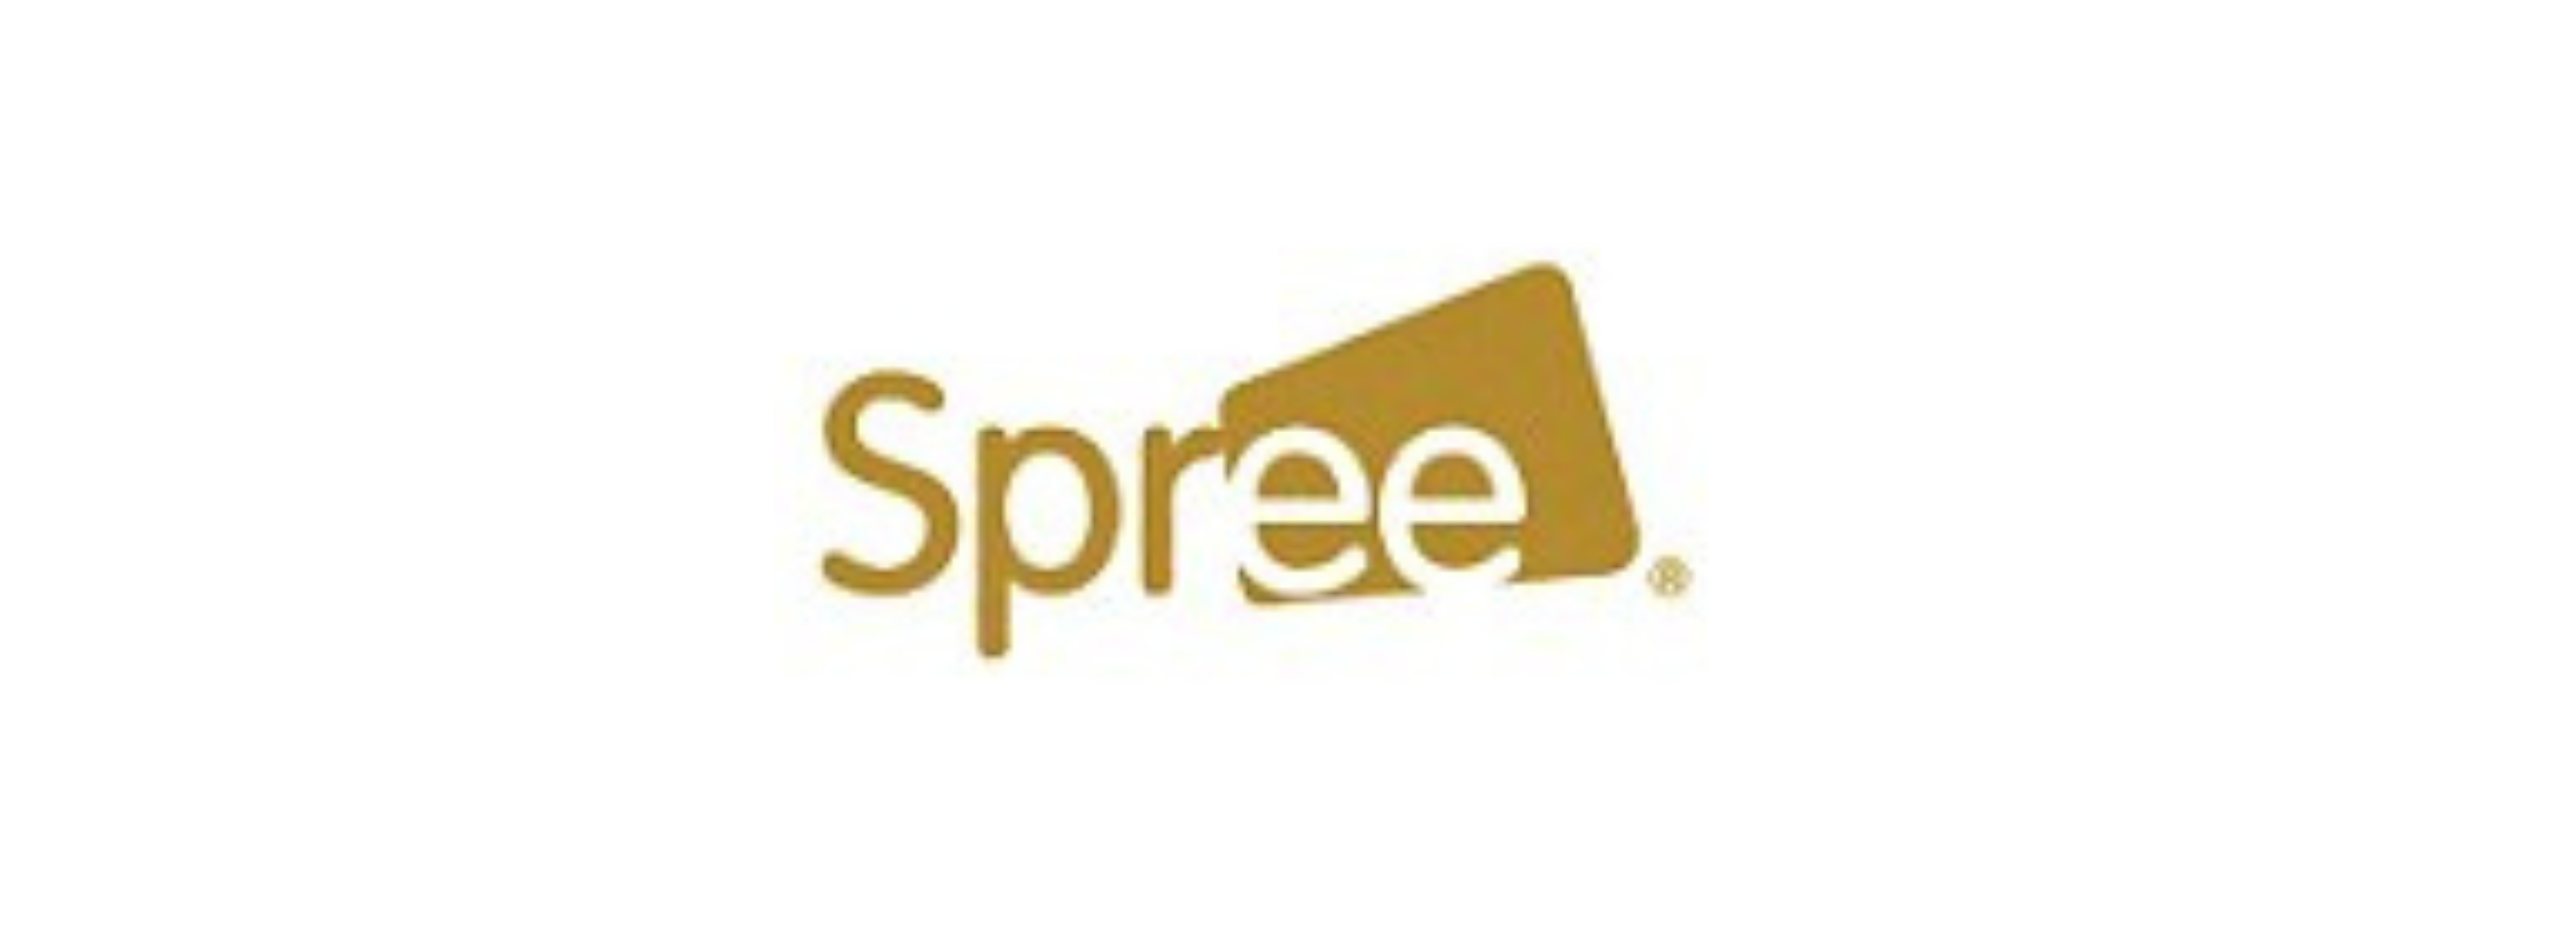 My spree card logo